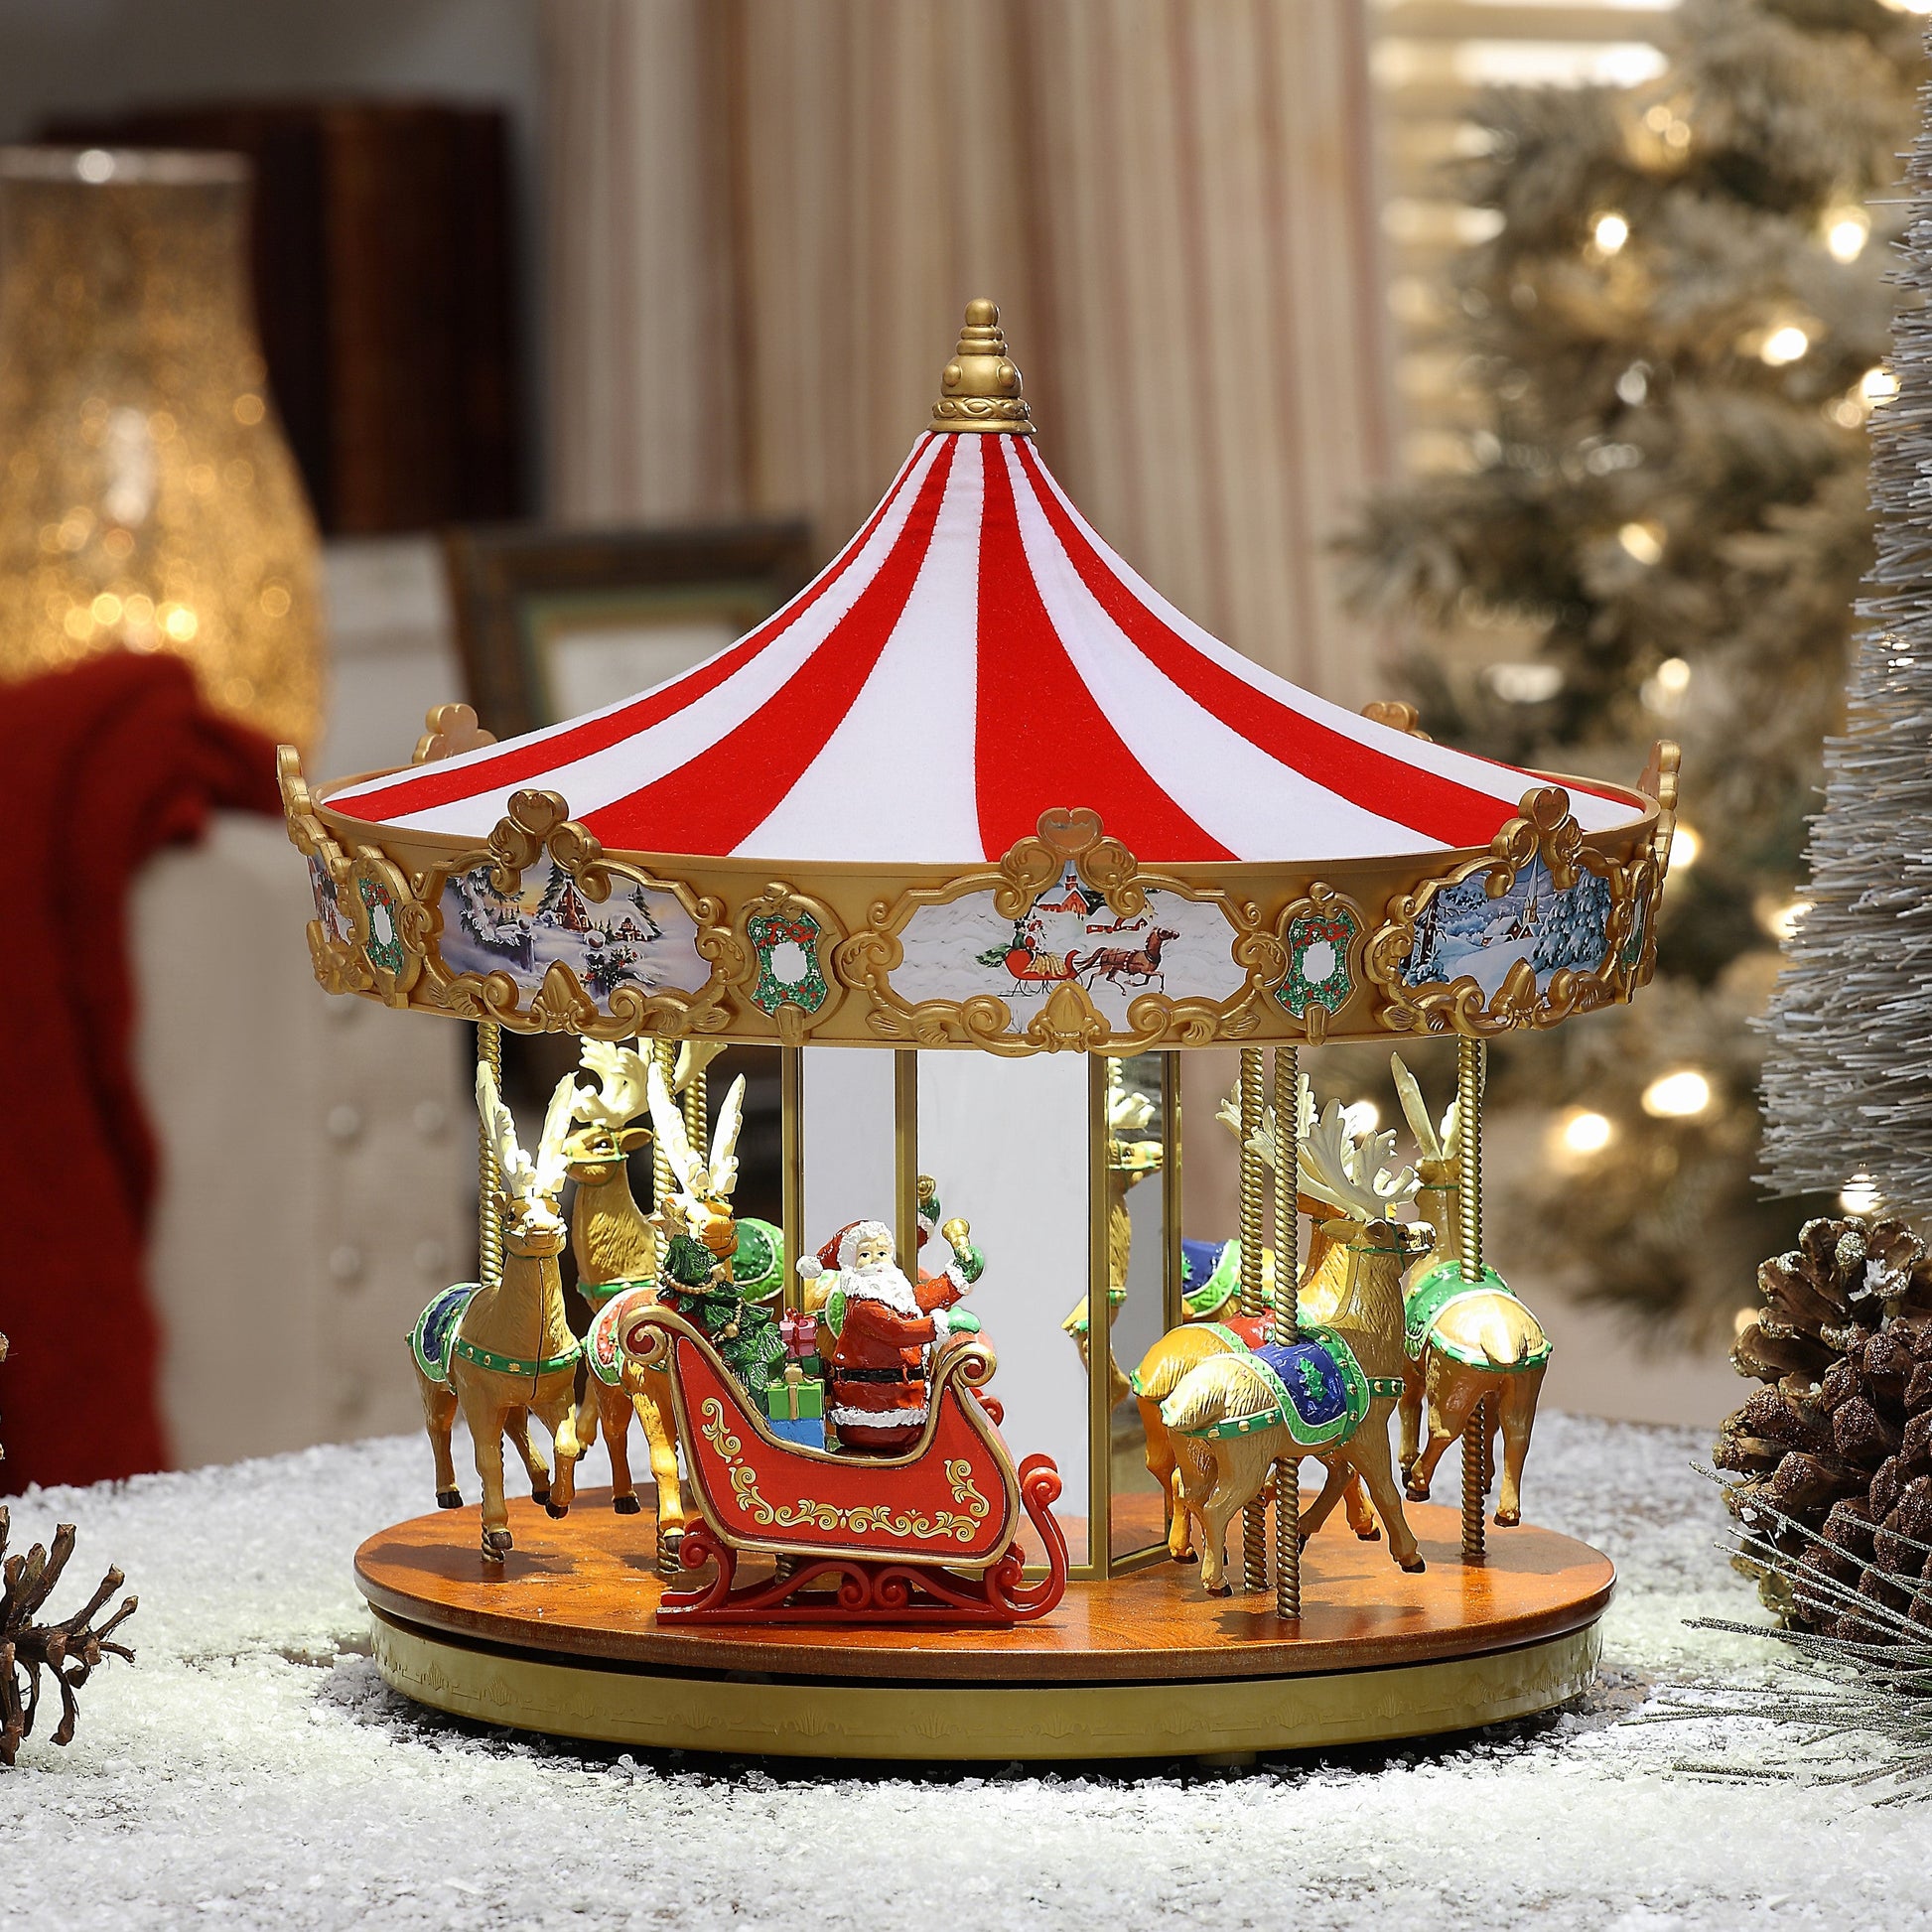 12" Animated Very Merry Carousel